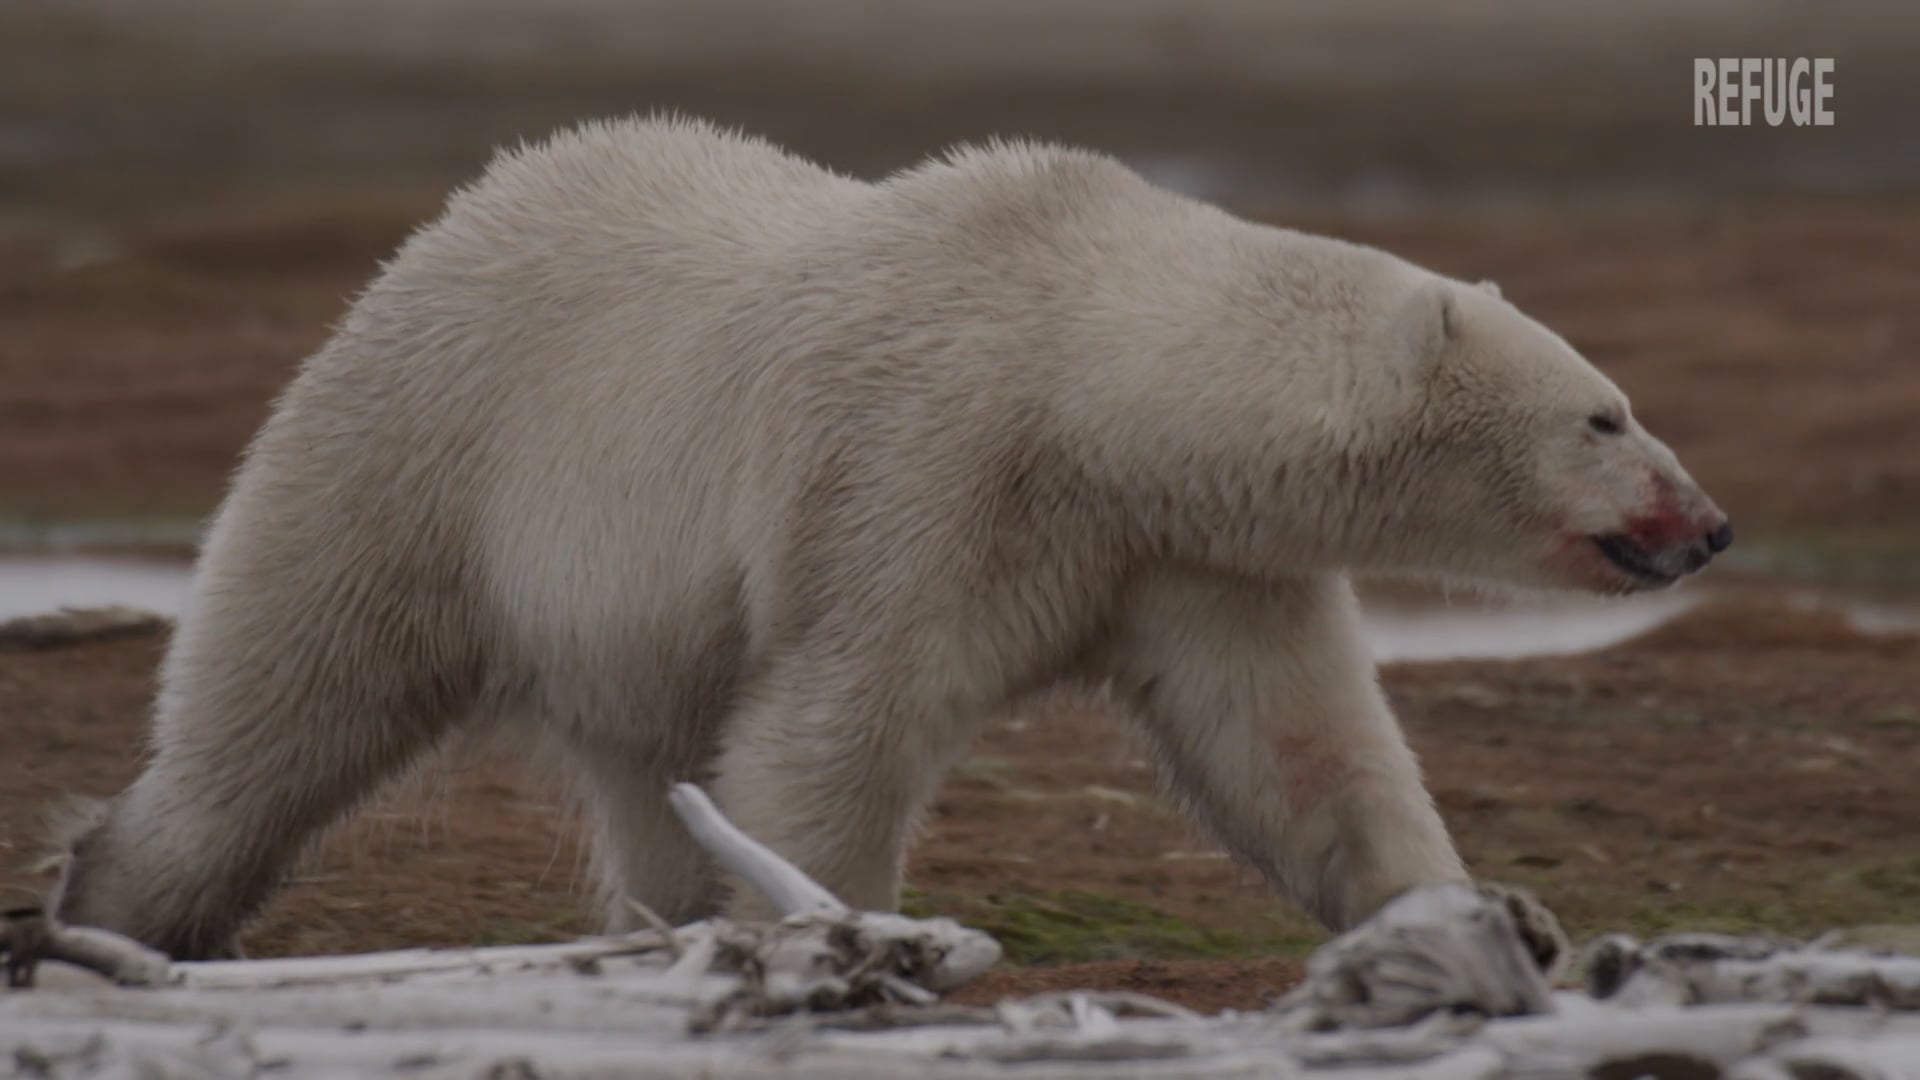 Arctic Wildlife Threatened